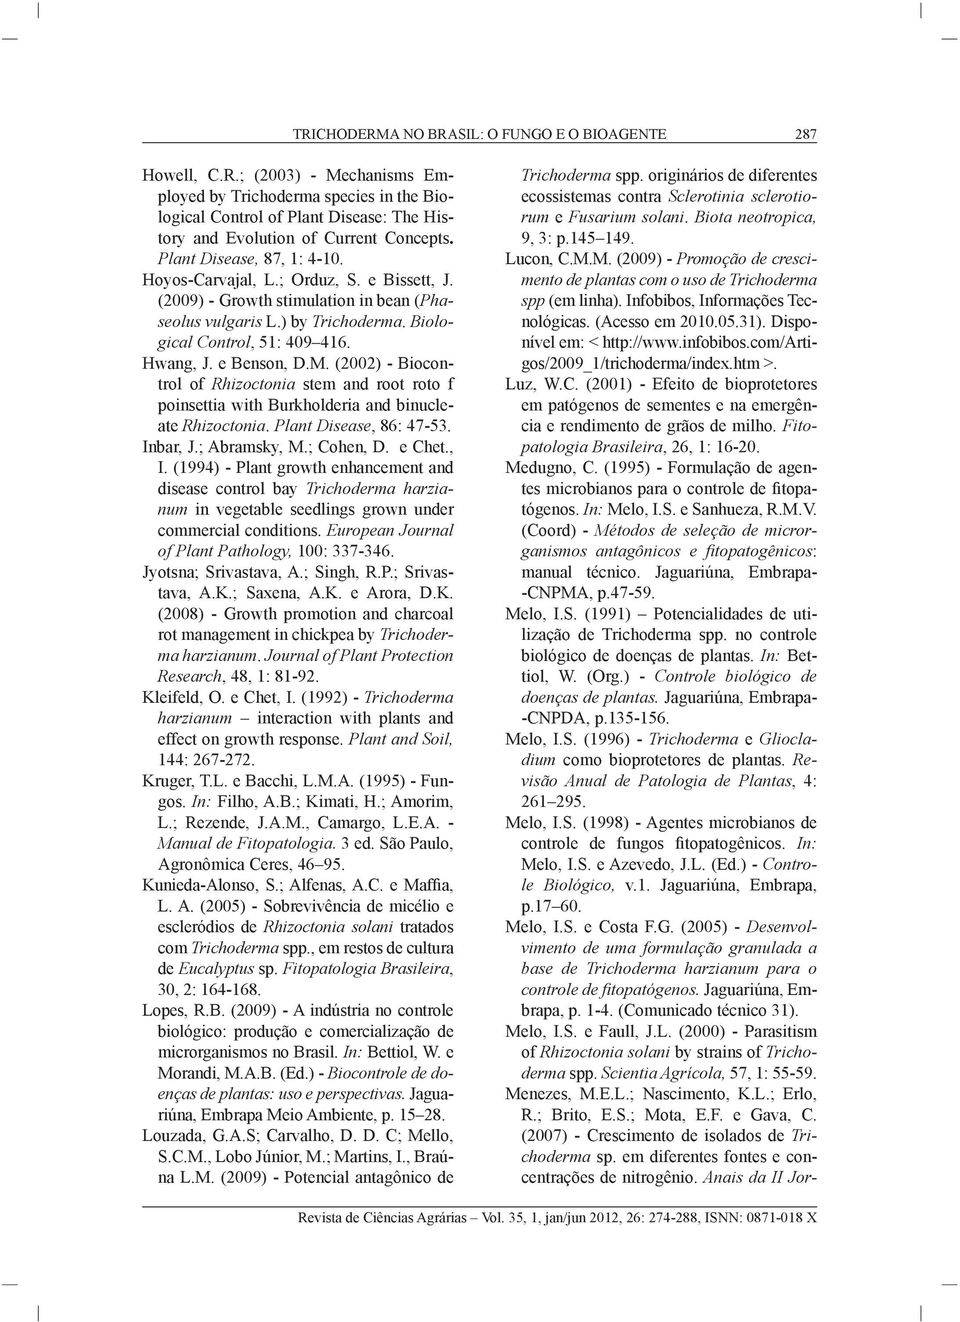 (2002) - Biocontrol of Rhizoctonia stem and root roto f poinsettia with Burkholderia and binucleate Rhizoctonia. Plant Disease, 86: 47-53. Inbar, J.; Abramsky, M.; Cohen, D. e Chet., I.